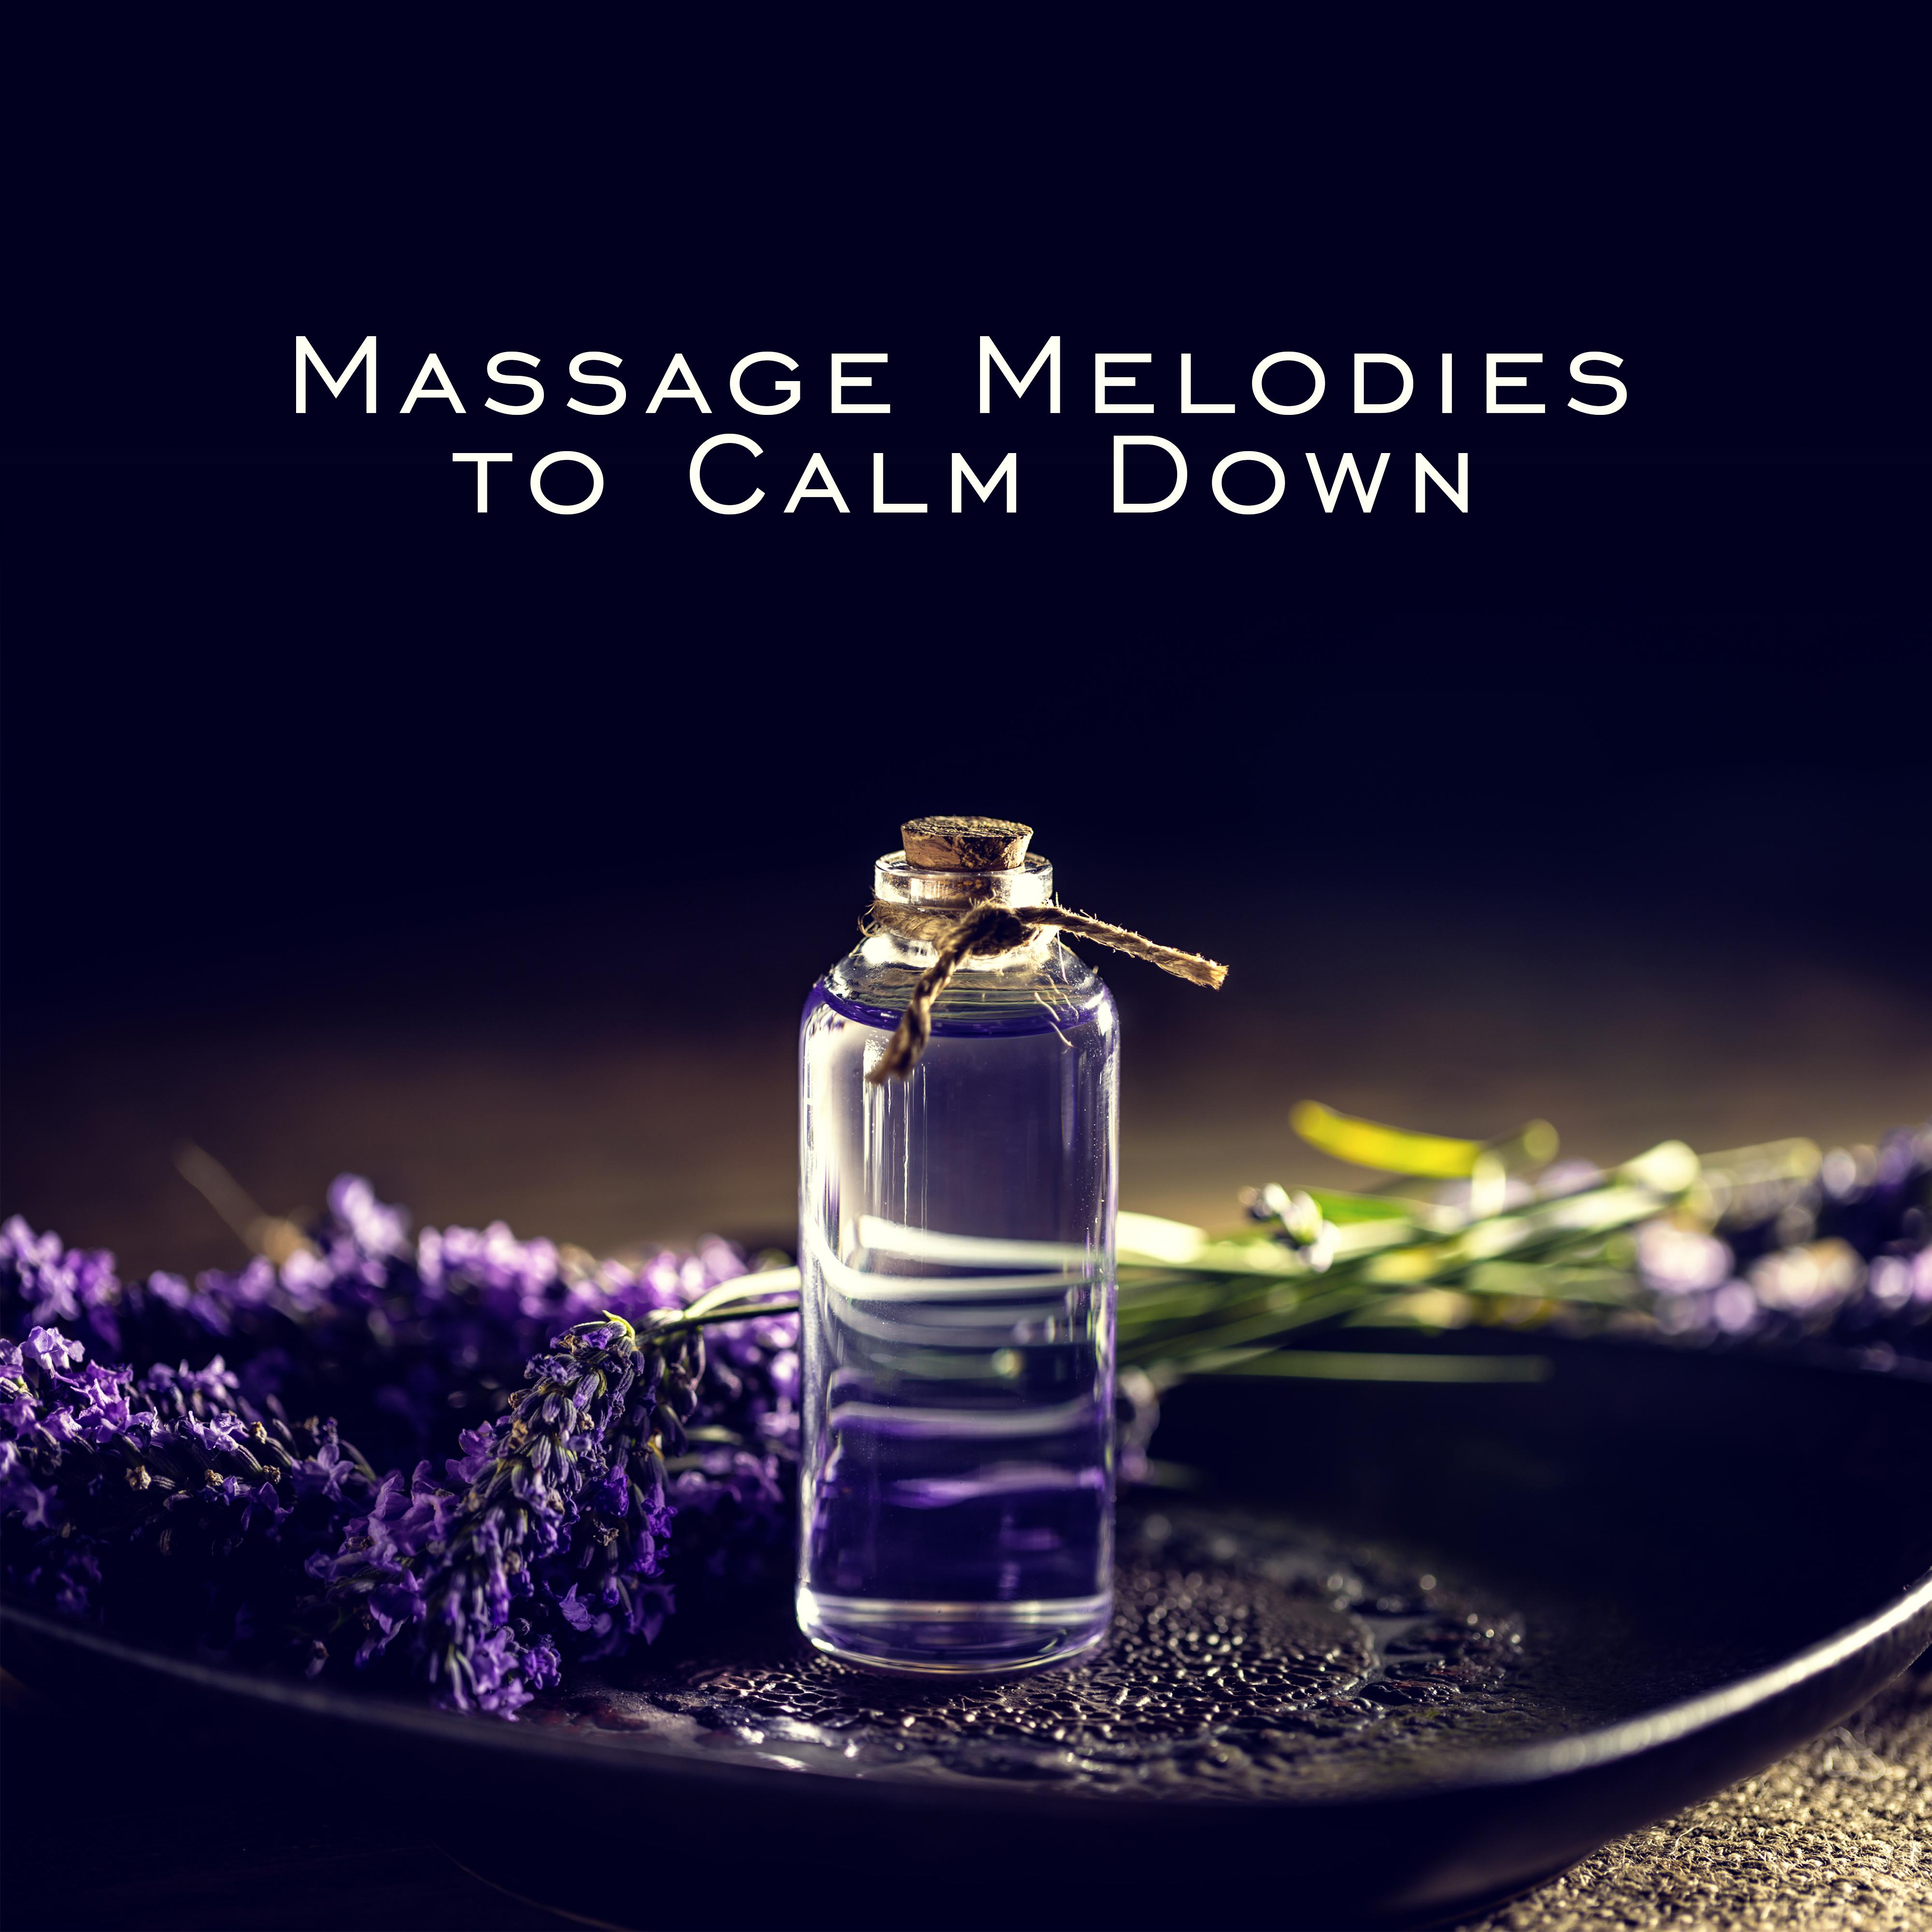 Massage Melodies to Calm Down